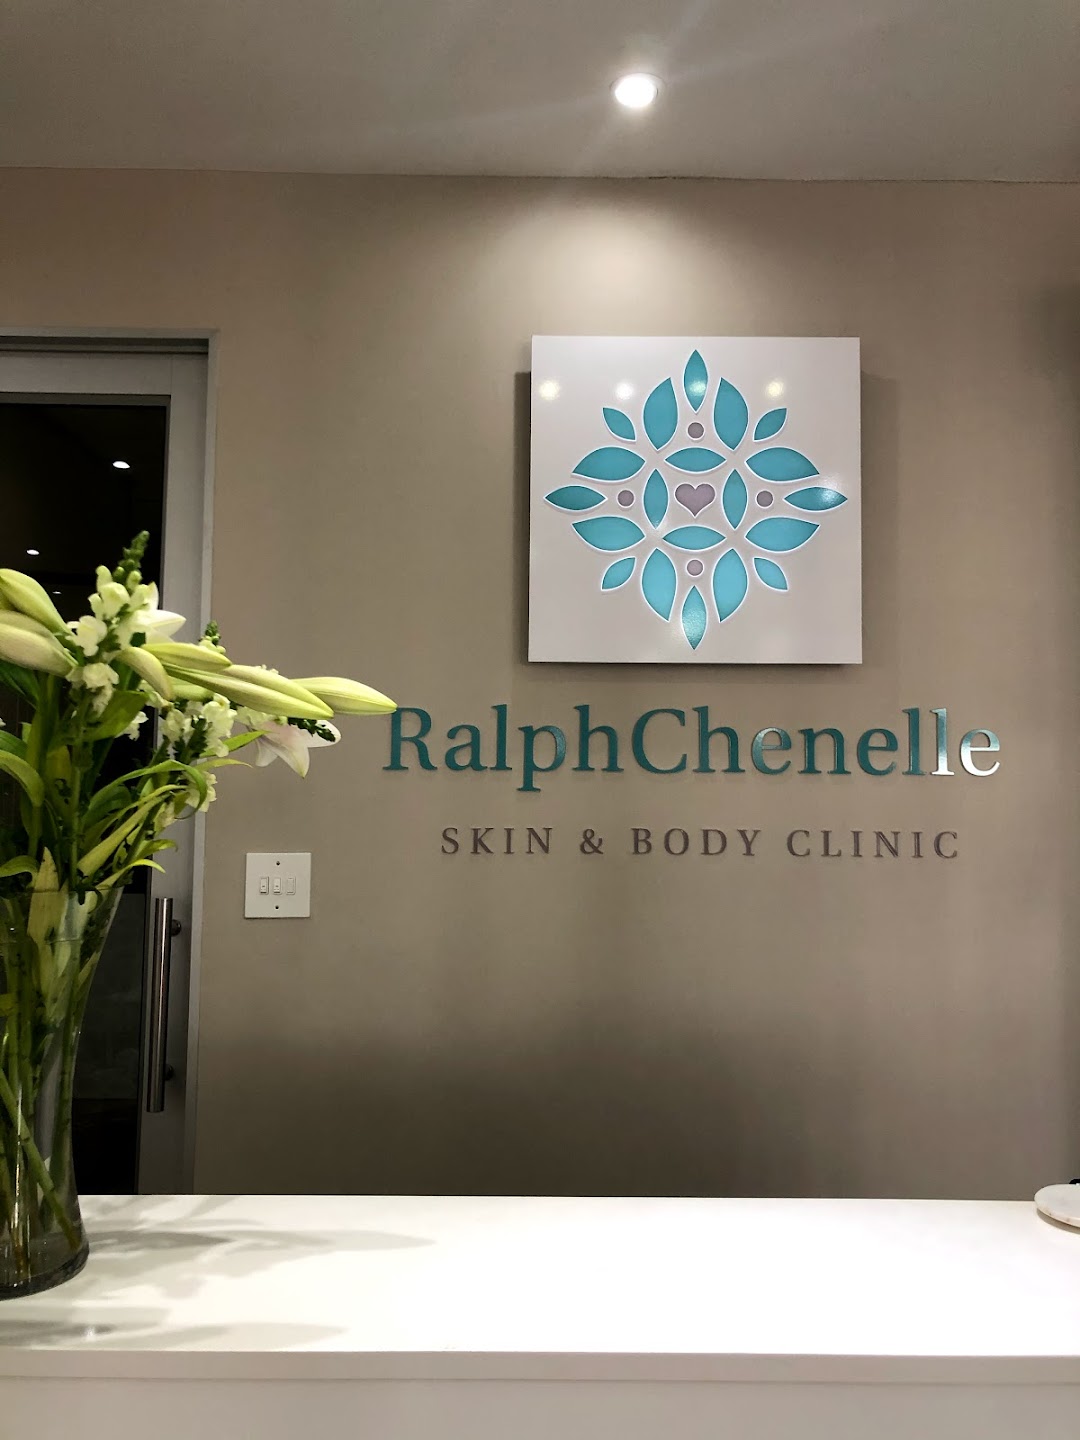 RalphChenelle Skin & Body Clinic